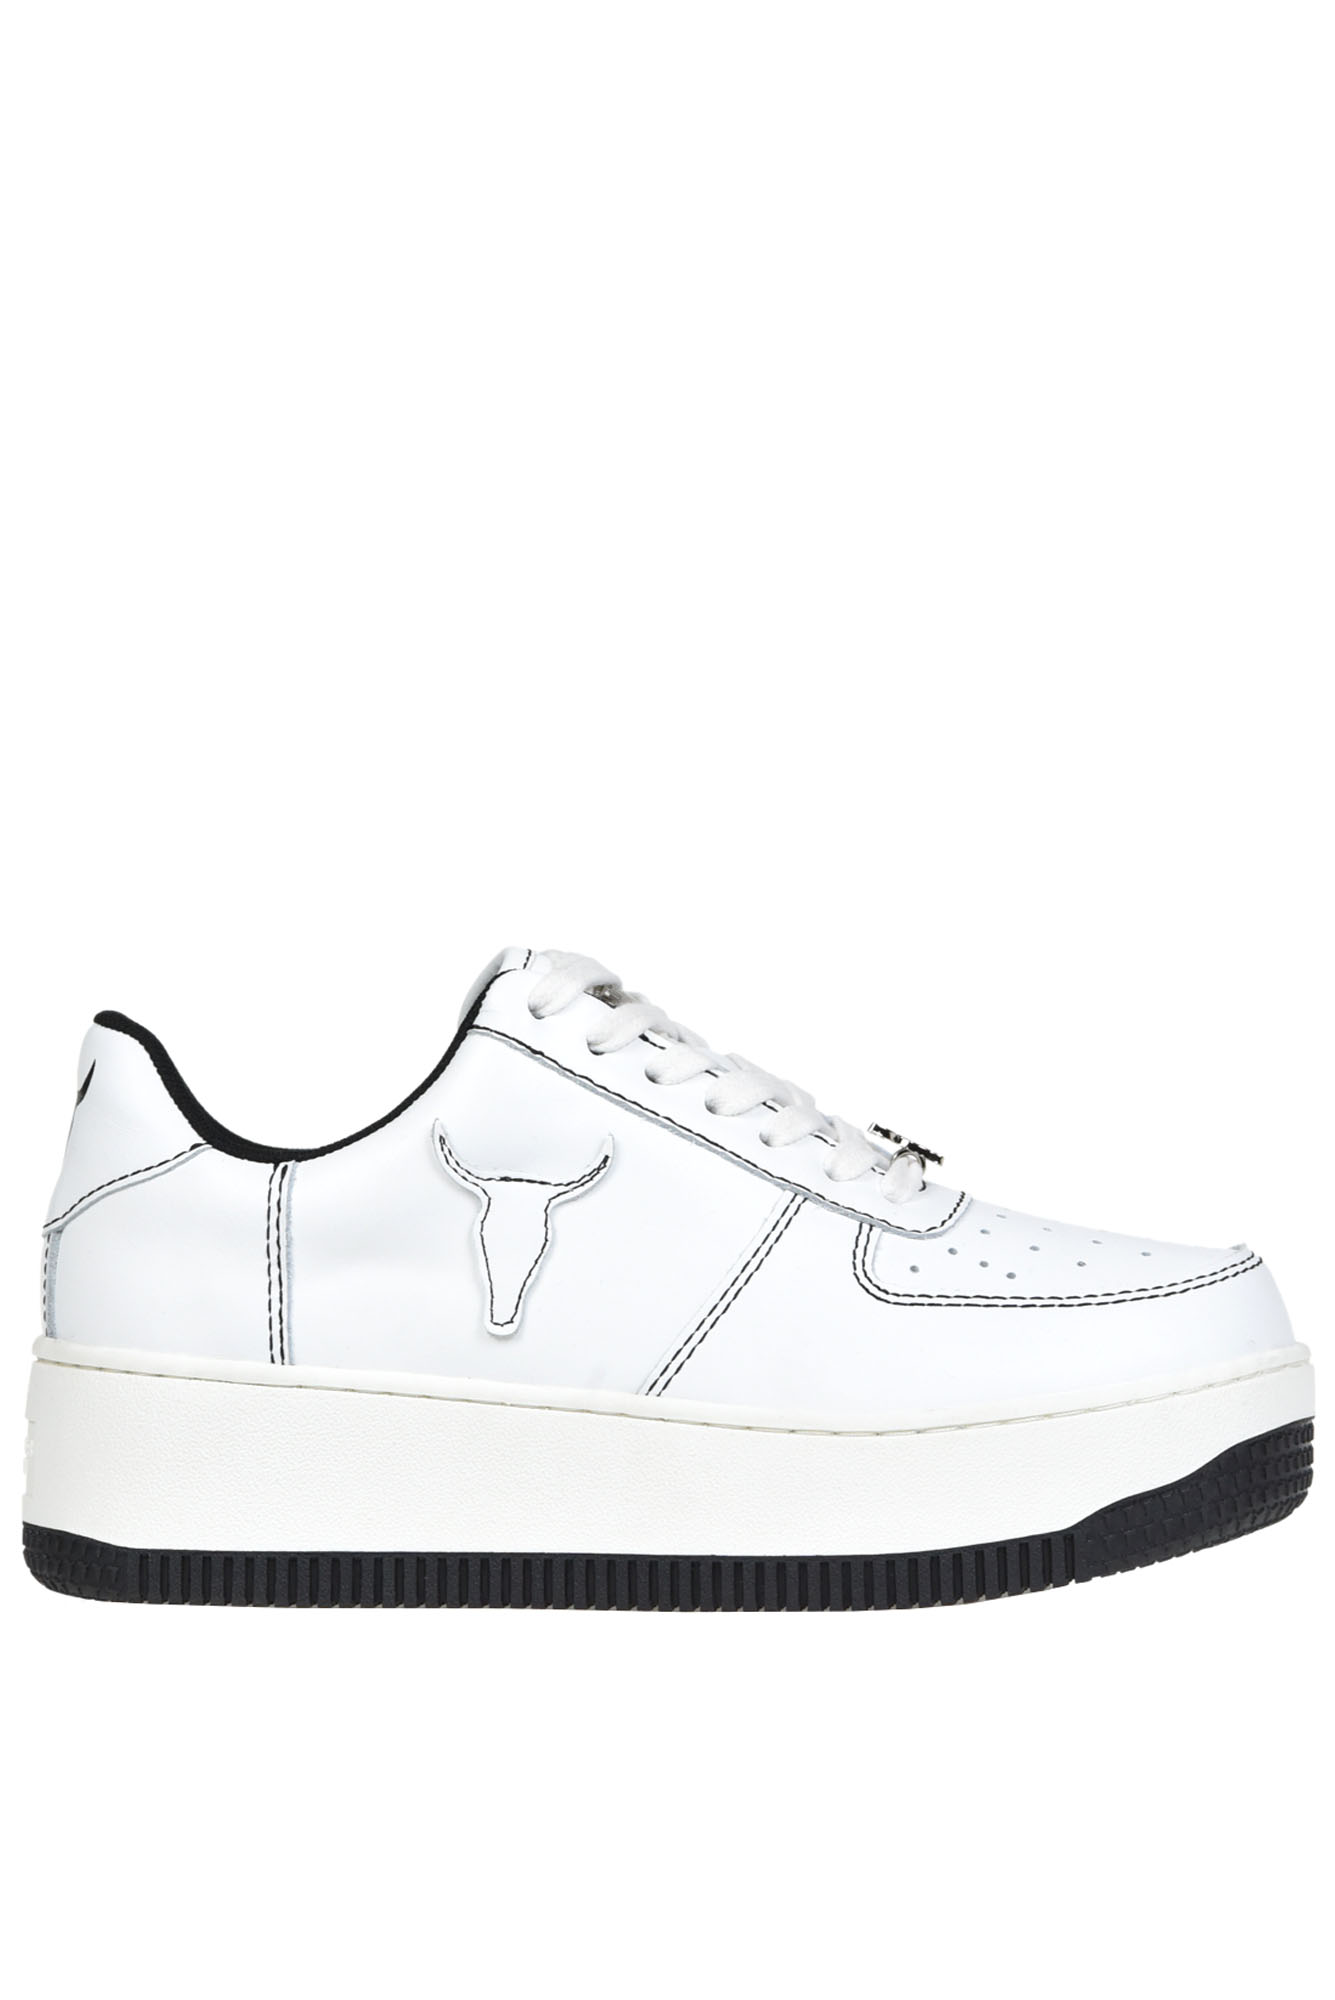 Windsor Smith Rebound Sneakers In White